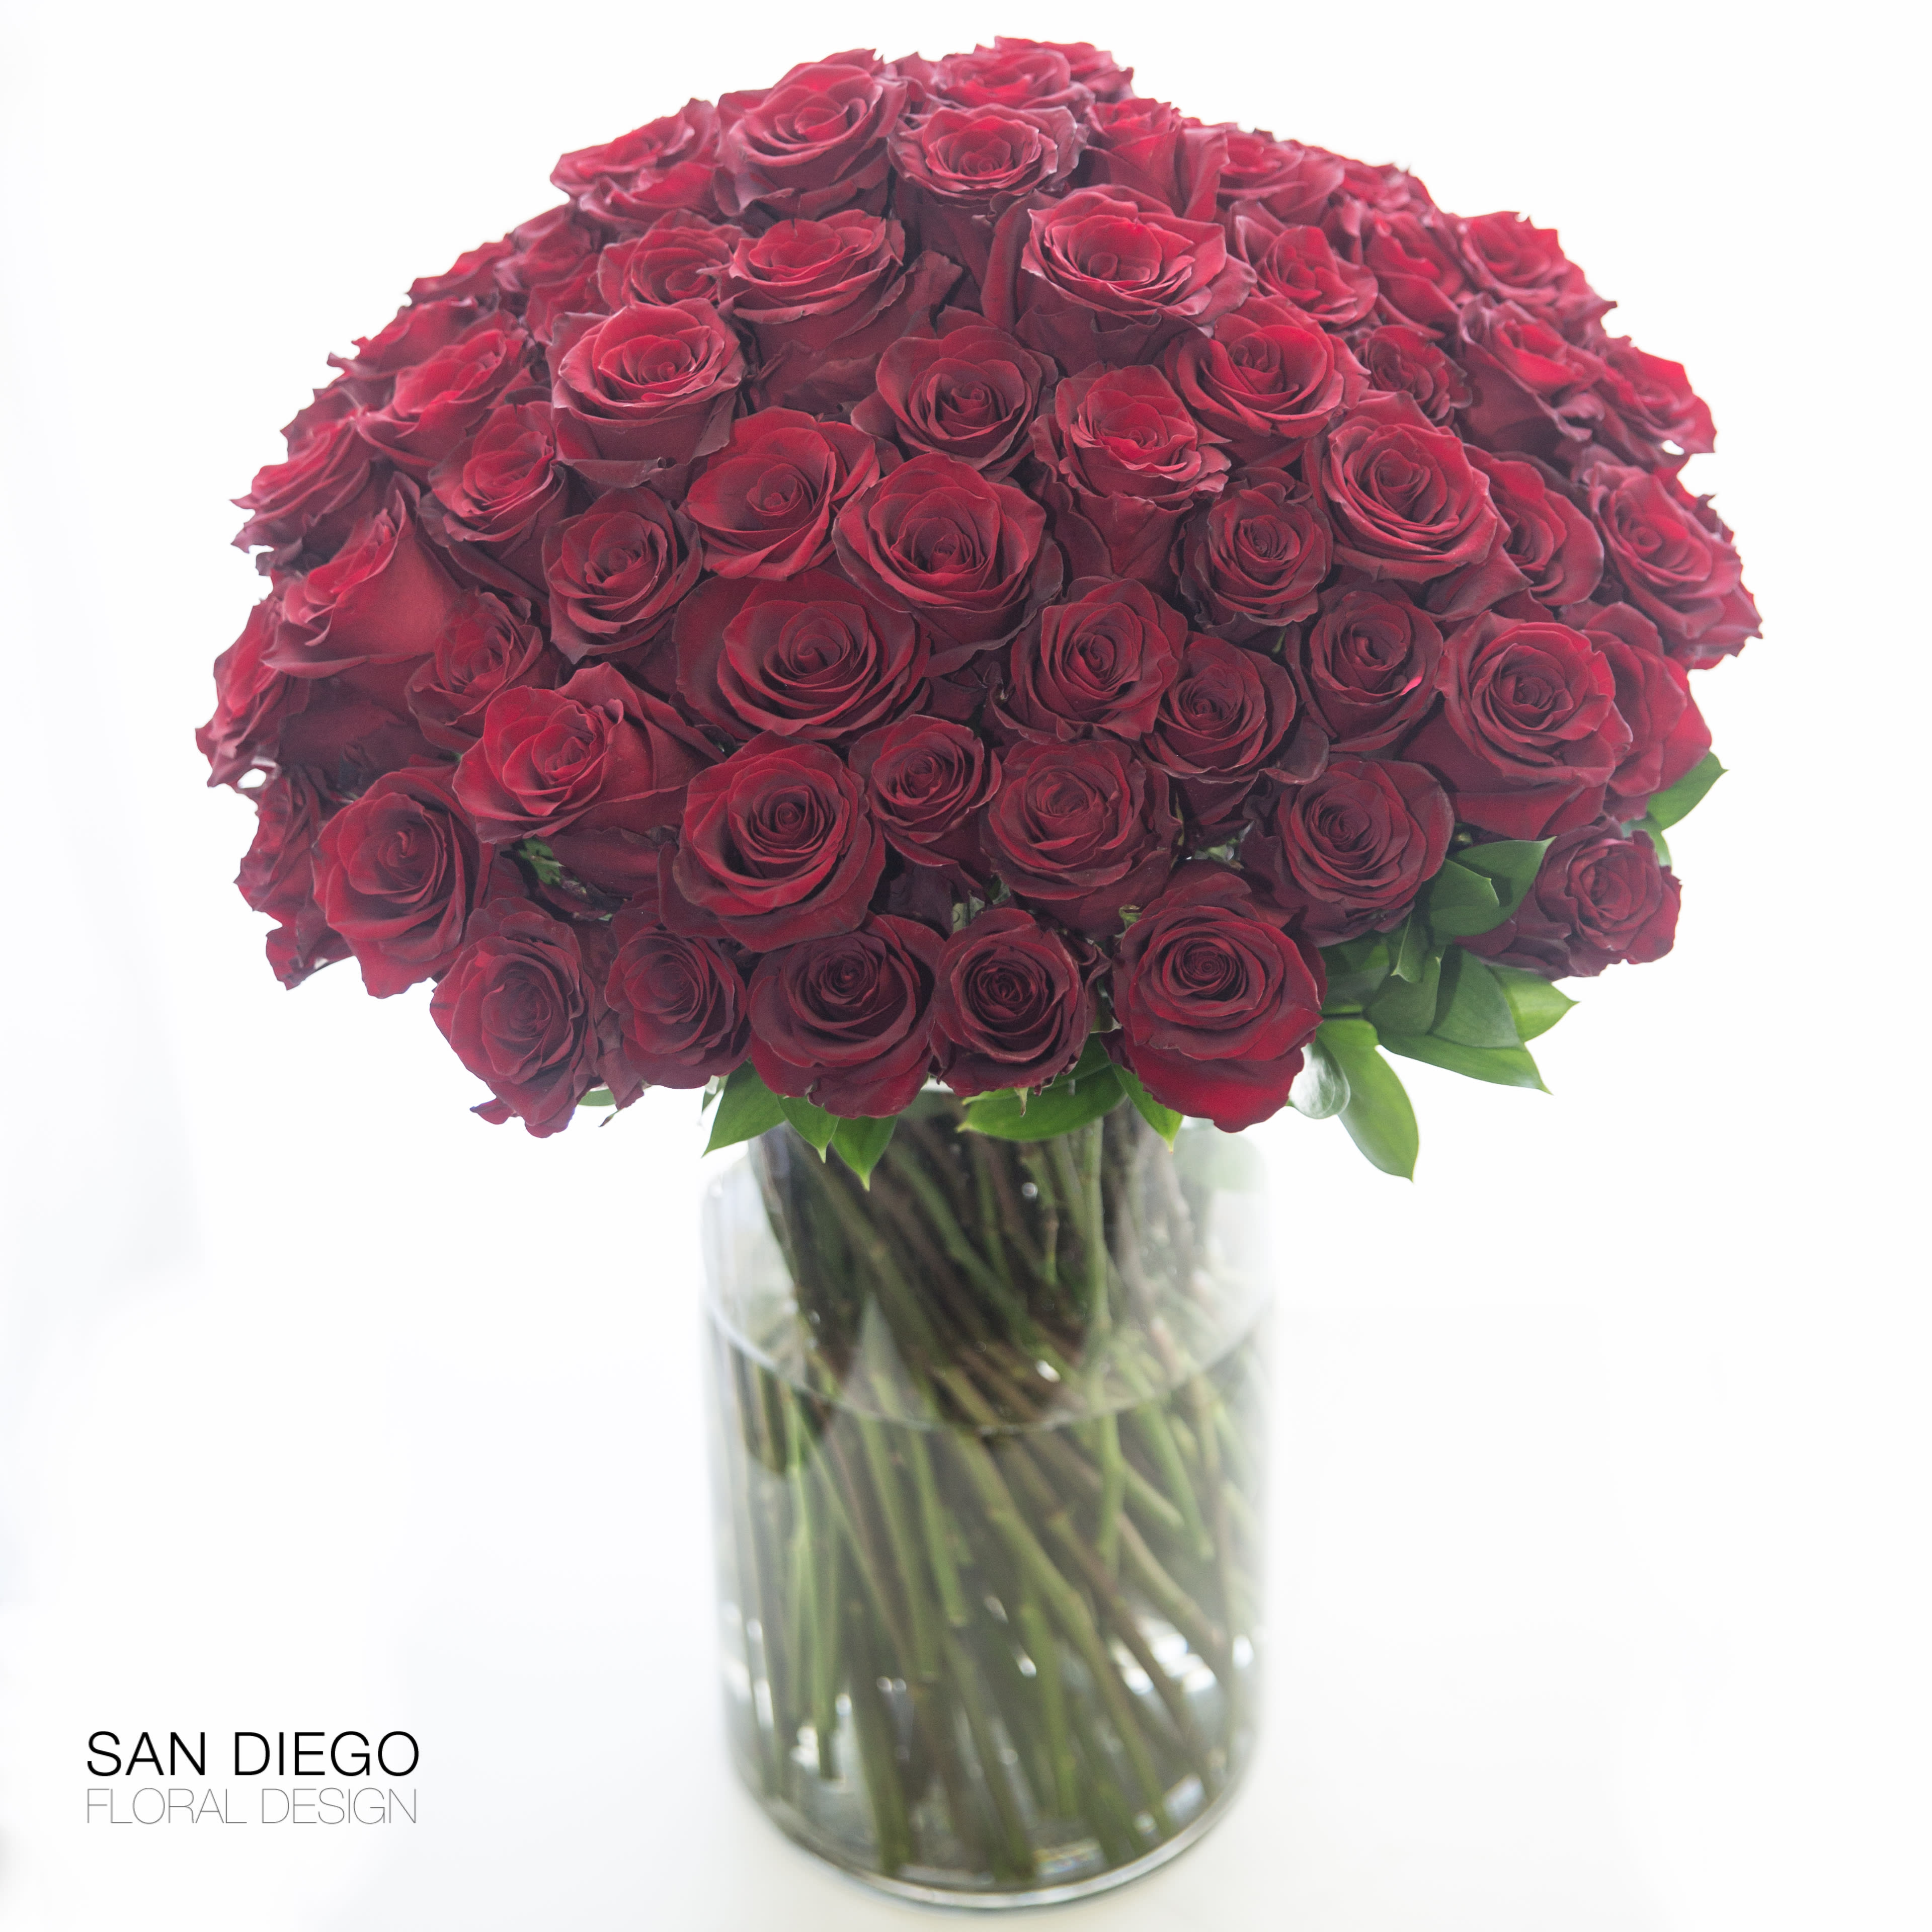 100 Long Stem Red Roses In San Diego Ca San Diego Floral Design